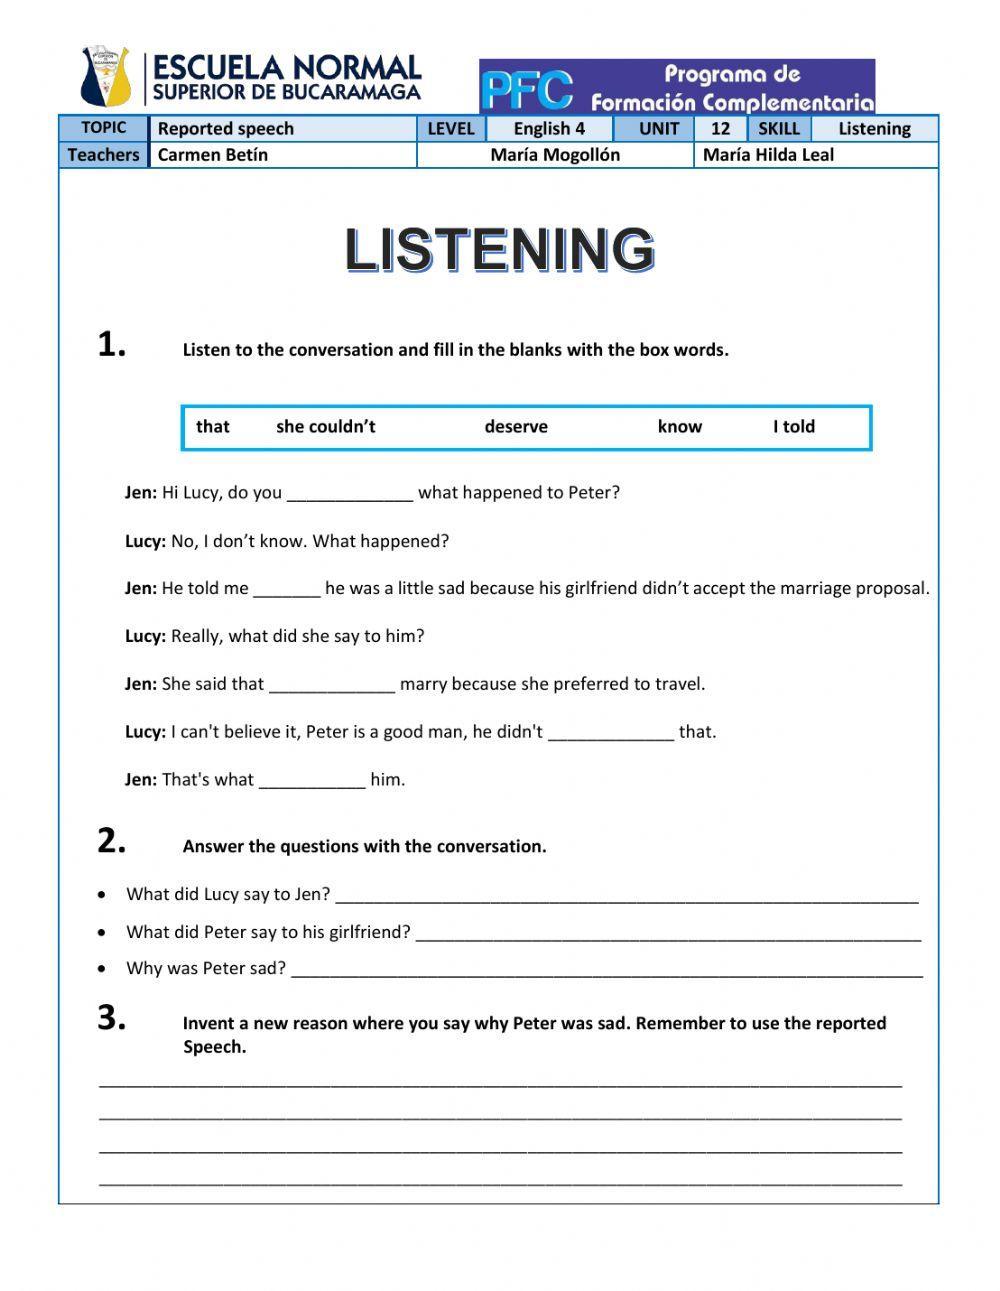 reported speech listening exercise